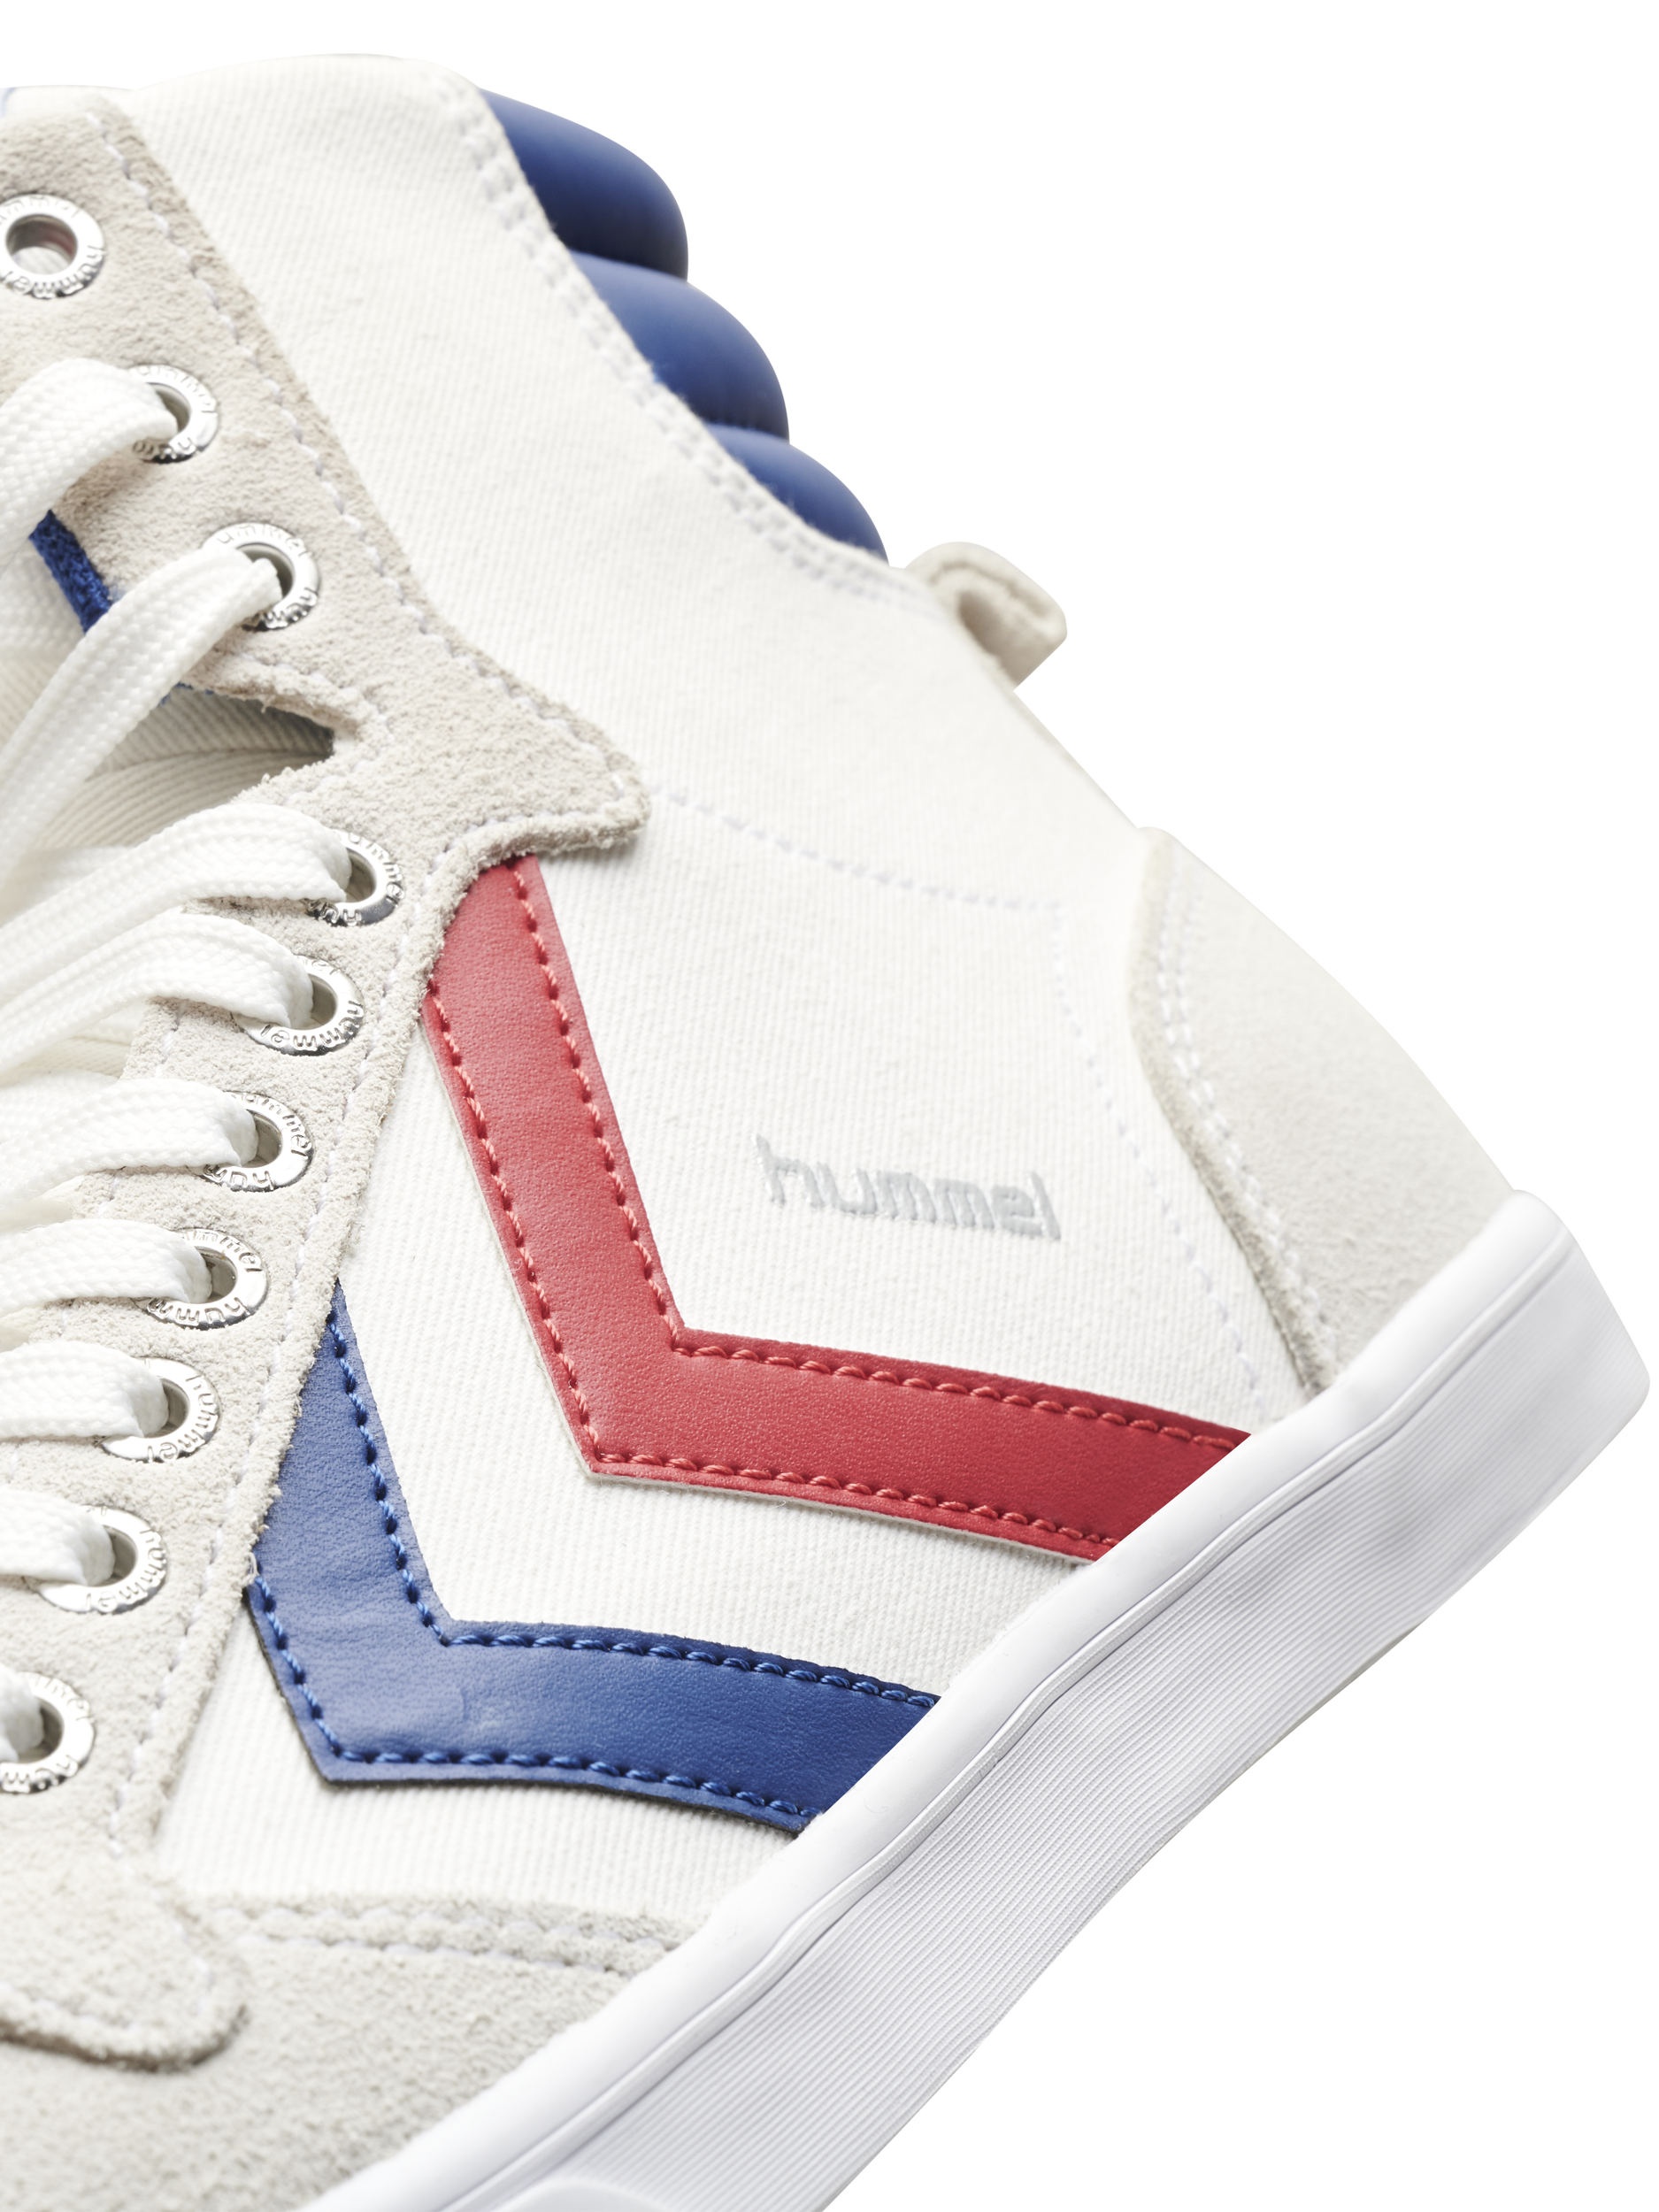 Hummel slimmer stadil High Chaussures de sport High top sneaker blue white 63-511-7647 